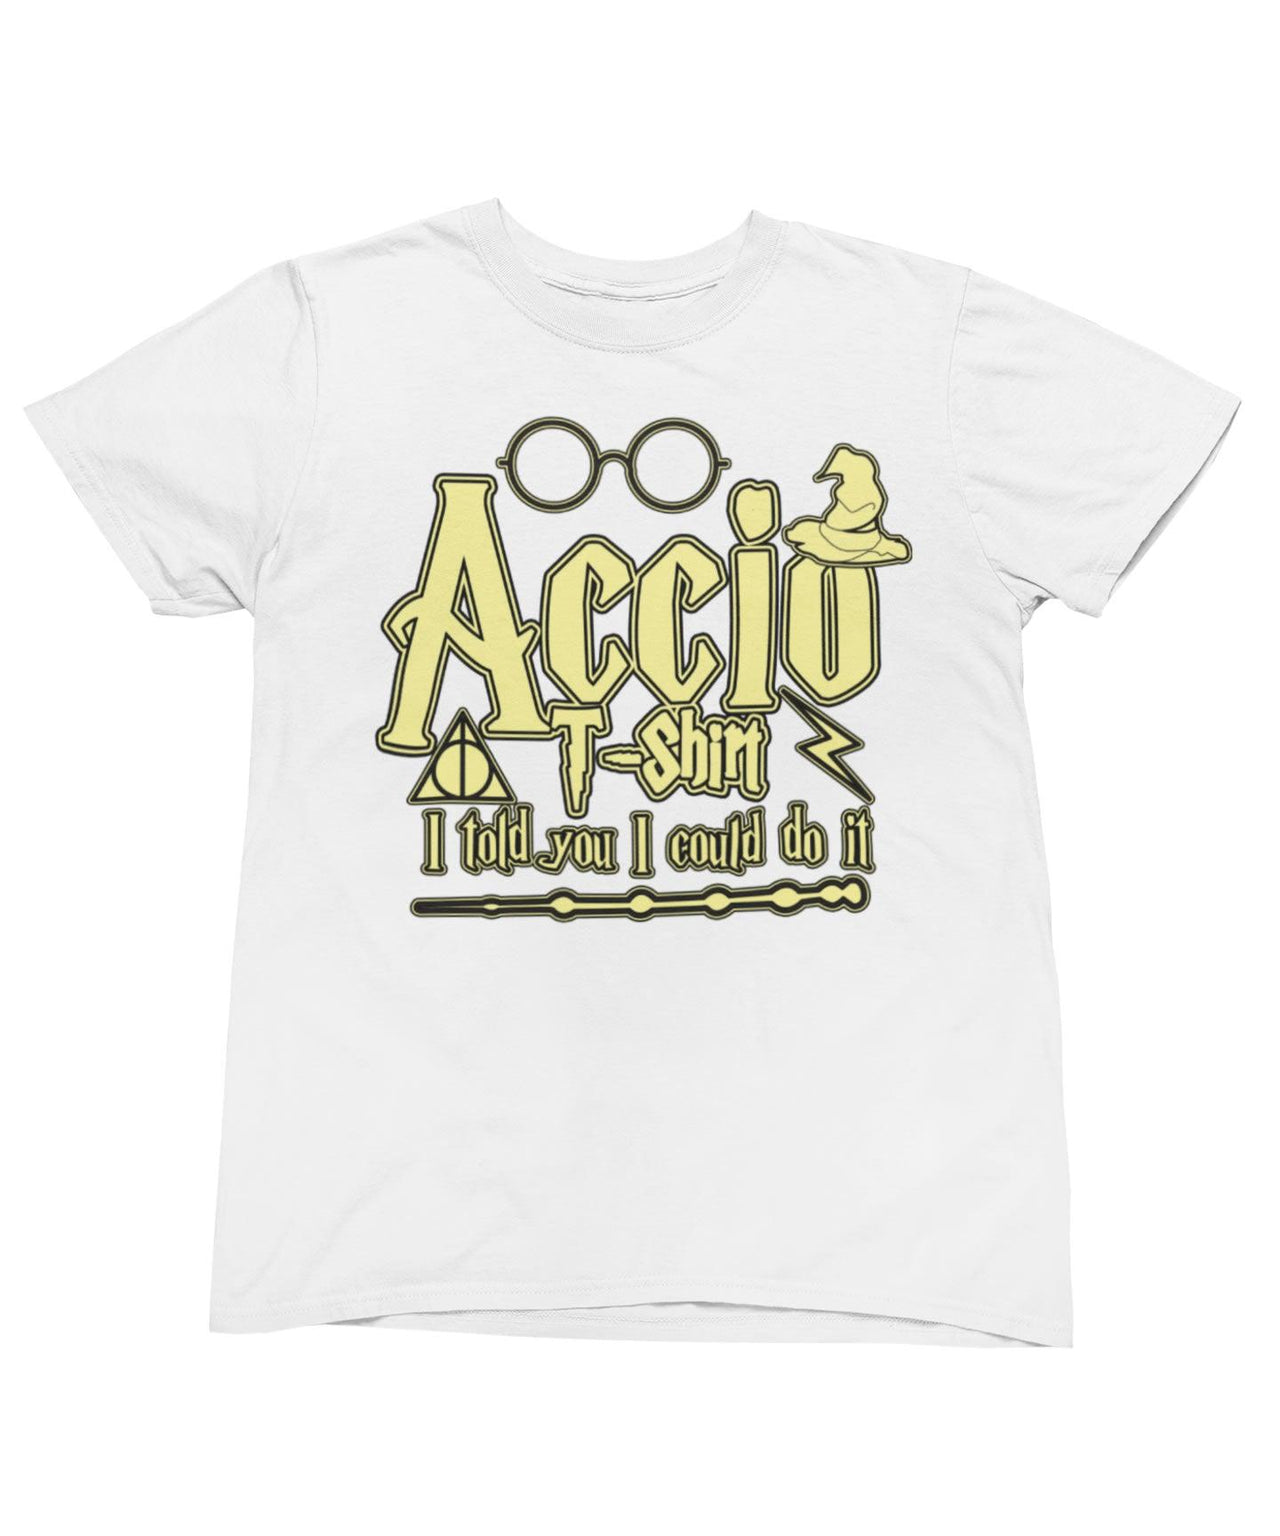 Top Notchy Accio Men's/Unisex Mens T-Shirt 8Ball